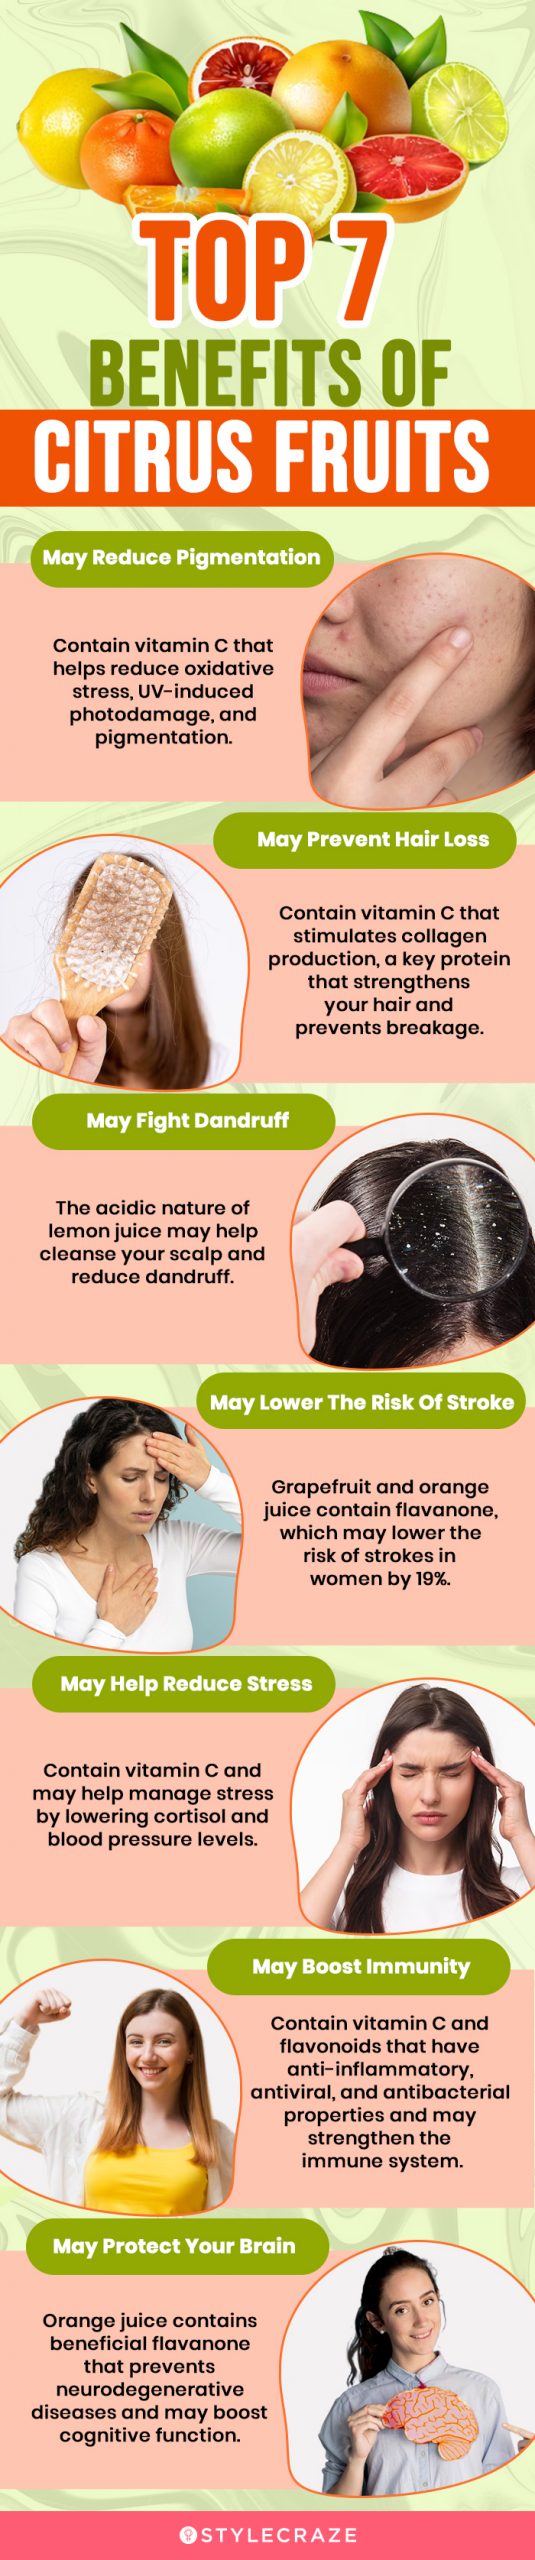 top 7 benefits of citrus fruits(infographic)